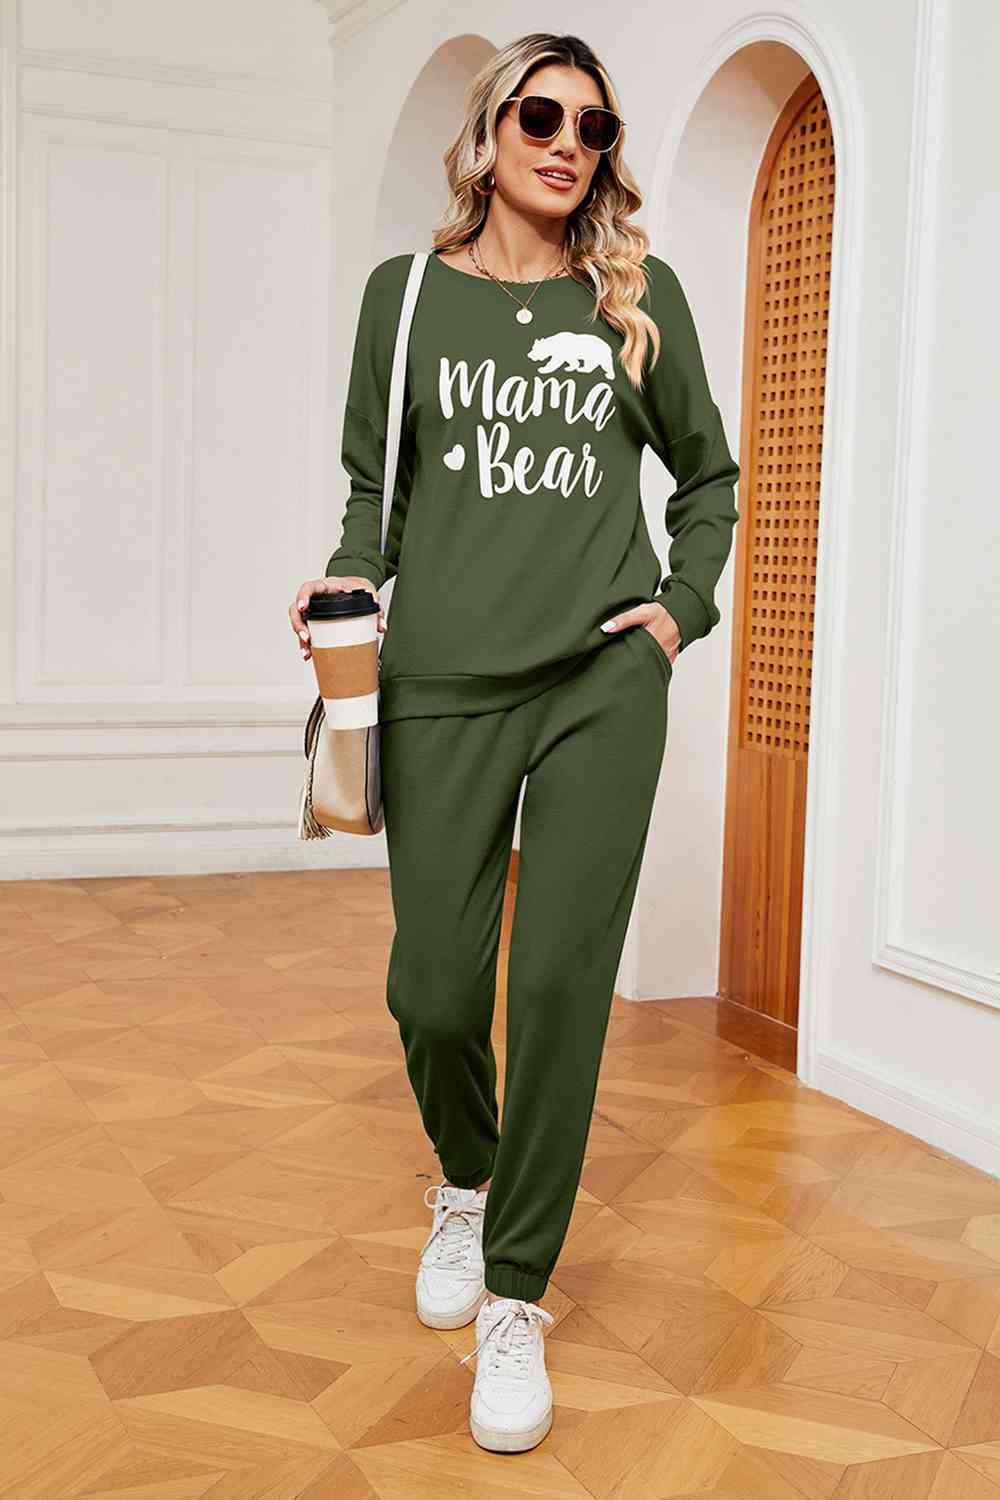 MAMA BEAR Graphic Sweatshirt and Sweatpants Set (5 Colors) Loungewear Krazy Heart Designs Boutique Moss S 